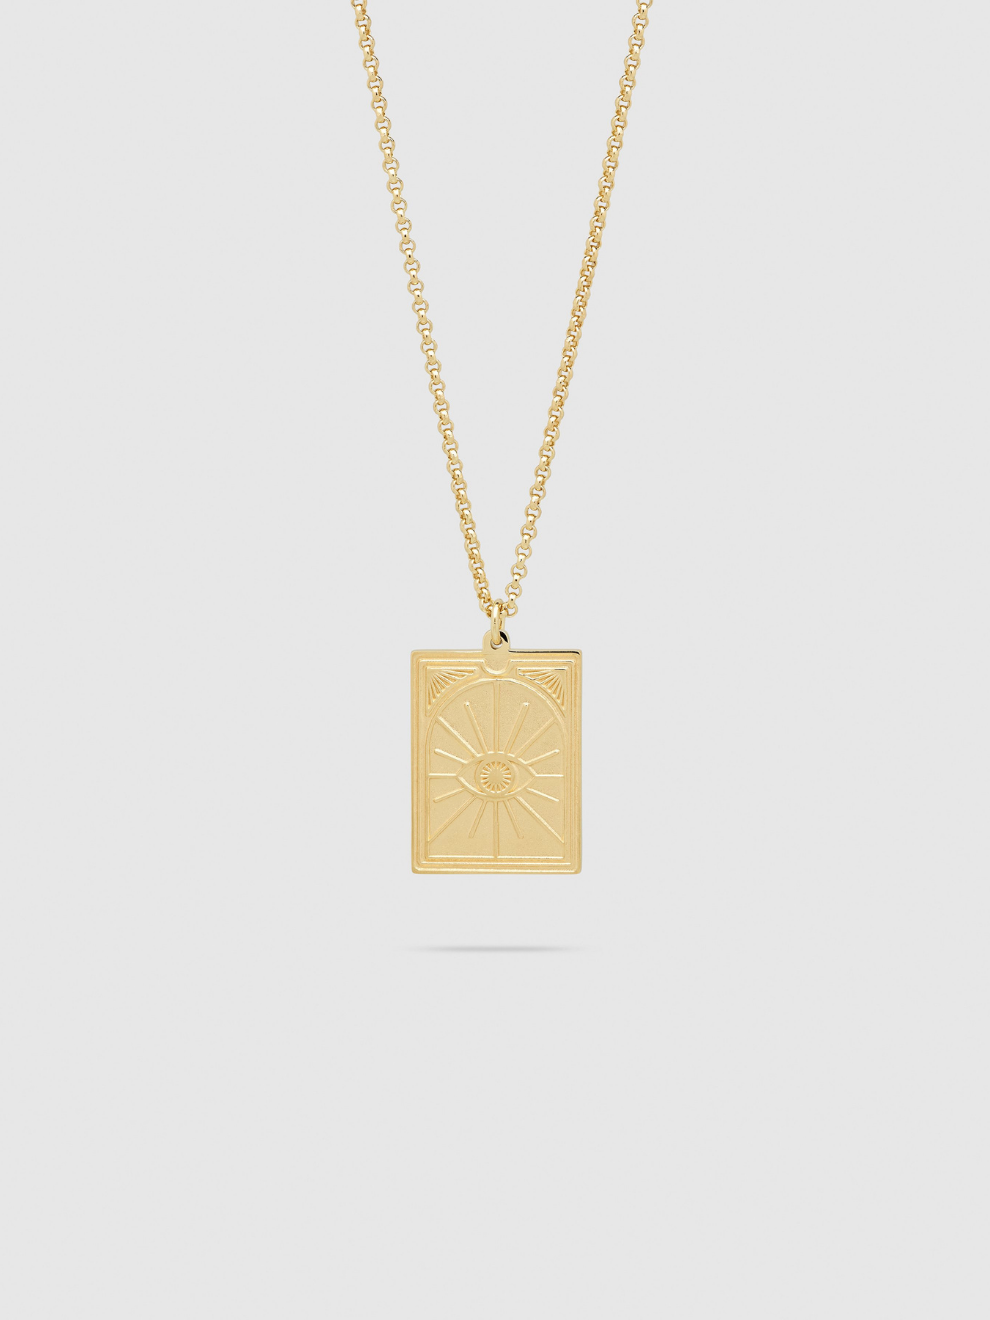 Tarot Sun Pendant Necklace in Gold